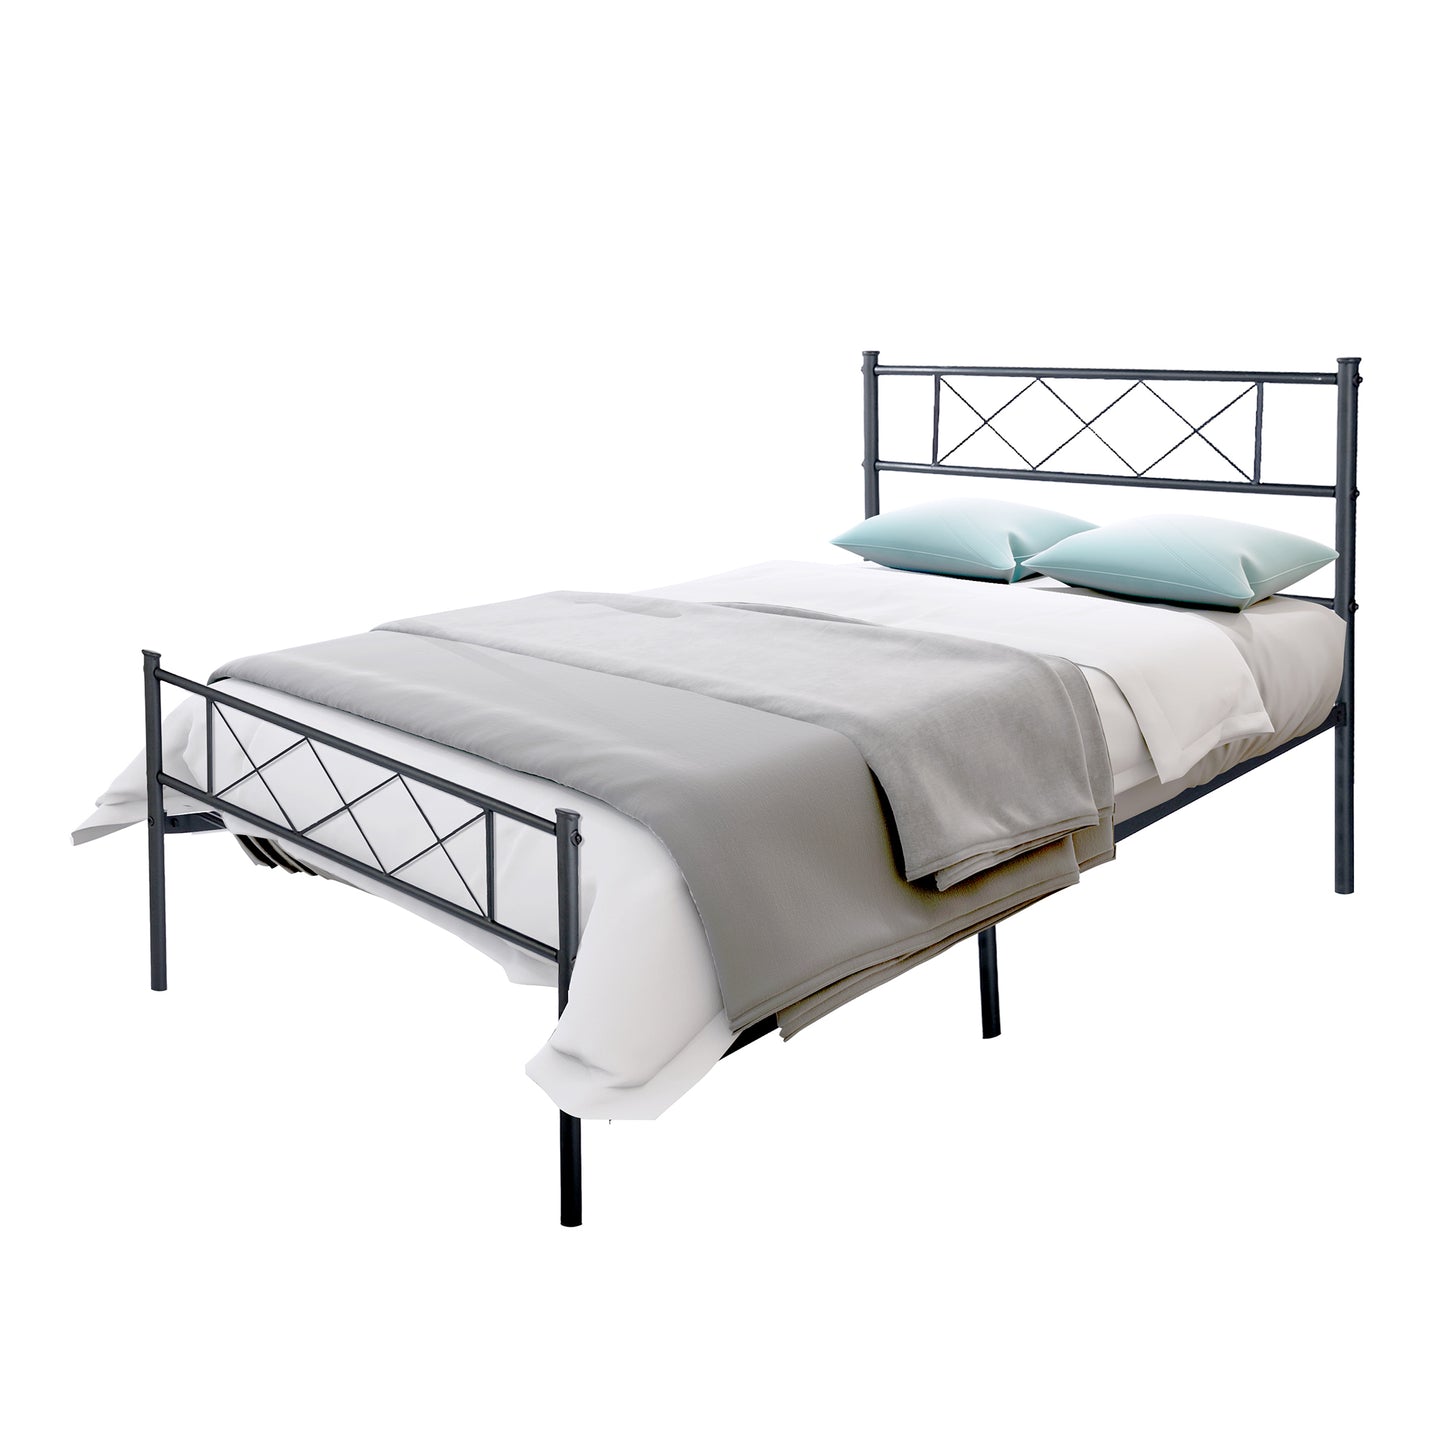 LT Twin Size Single Metal Bed Frame in Black Color